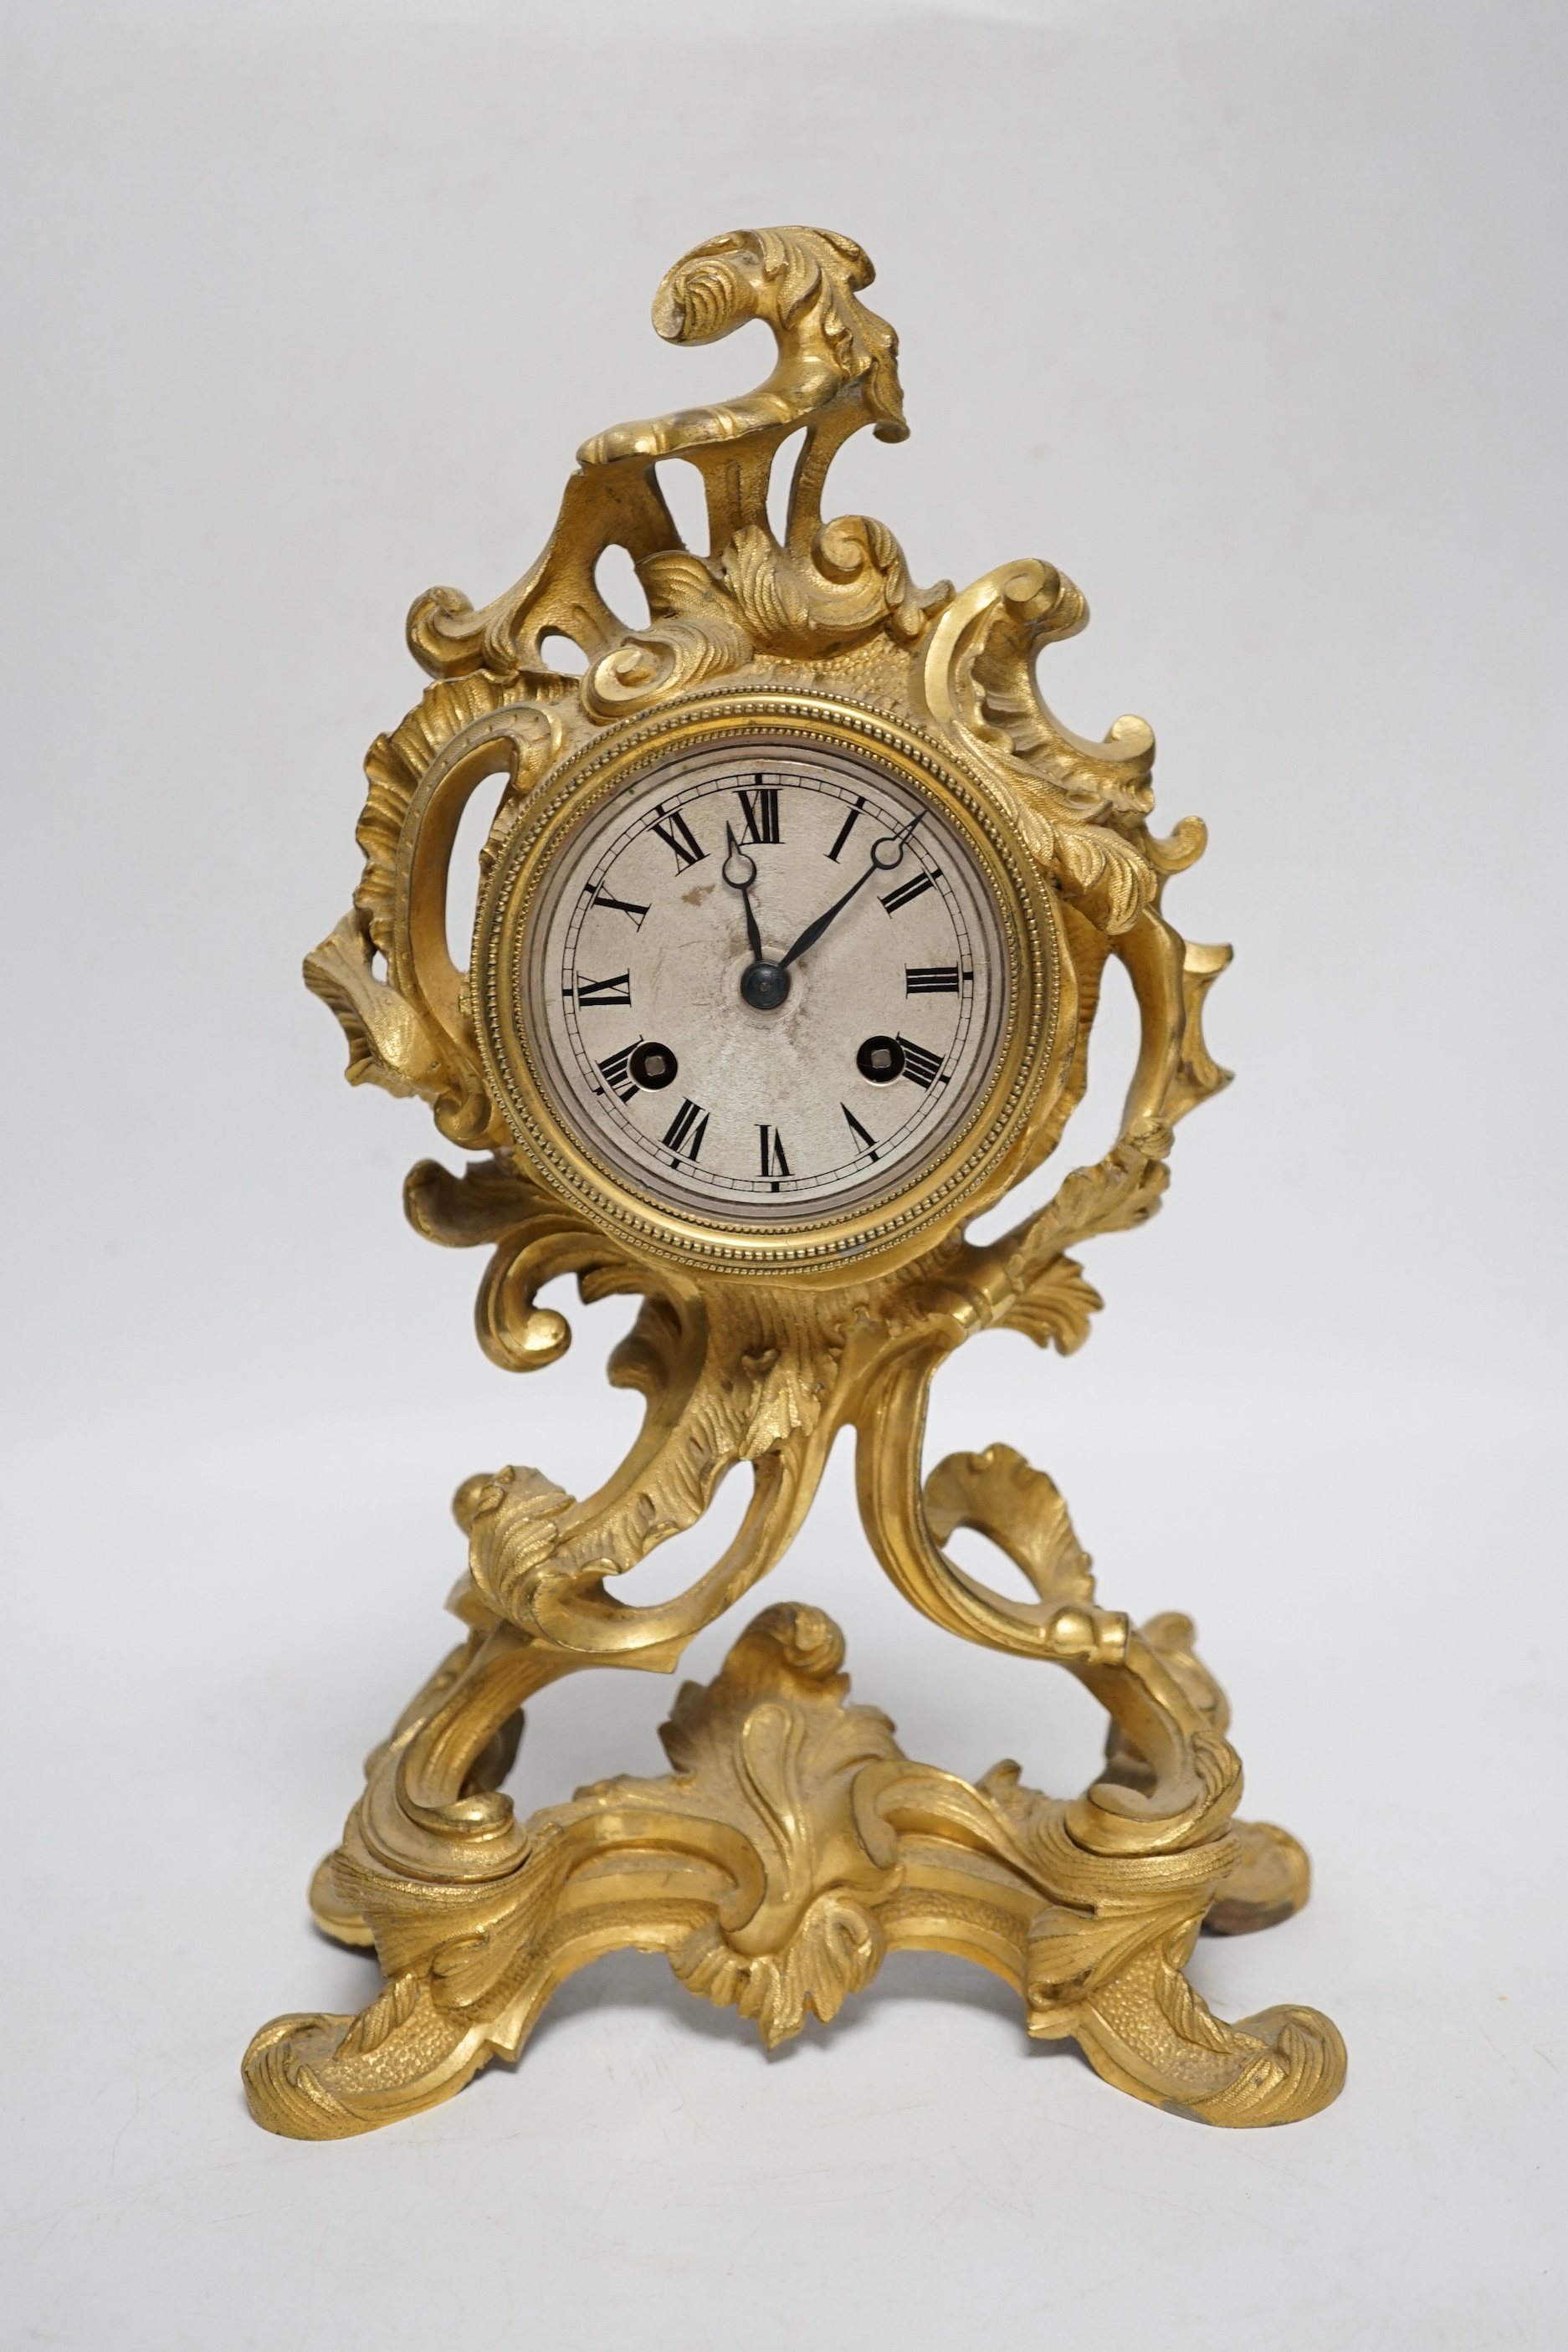 A 19th century French rococo-style ormolu mantel clock with Raingo movement striking on a bell (missing pendulum), 29cm